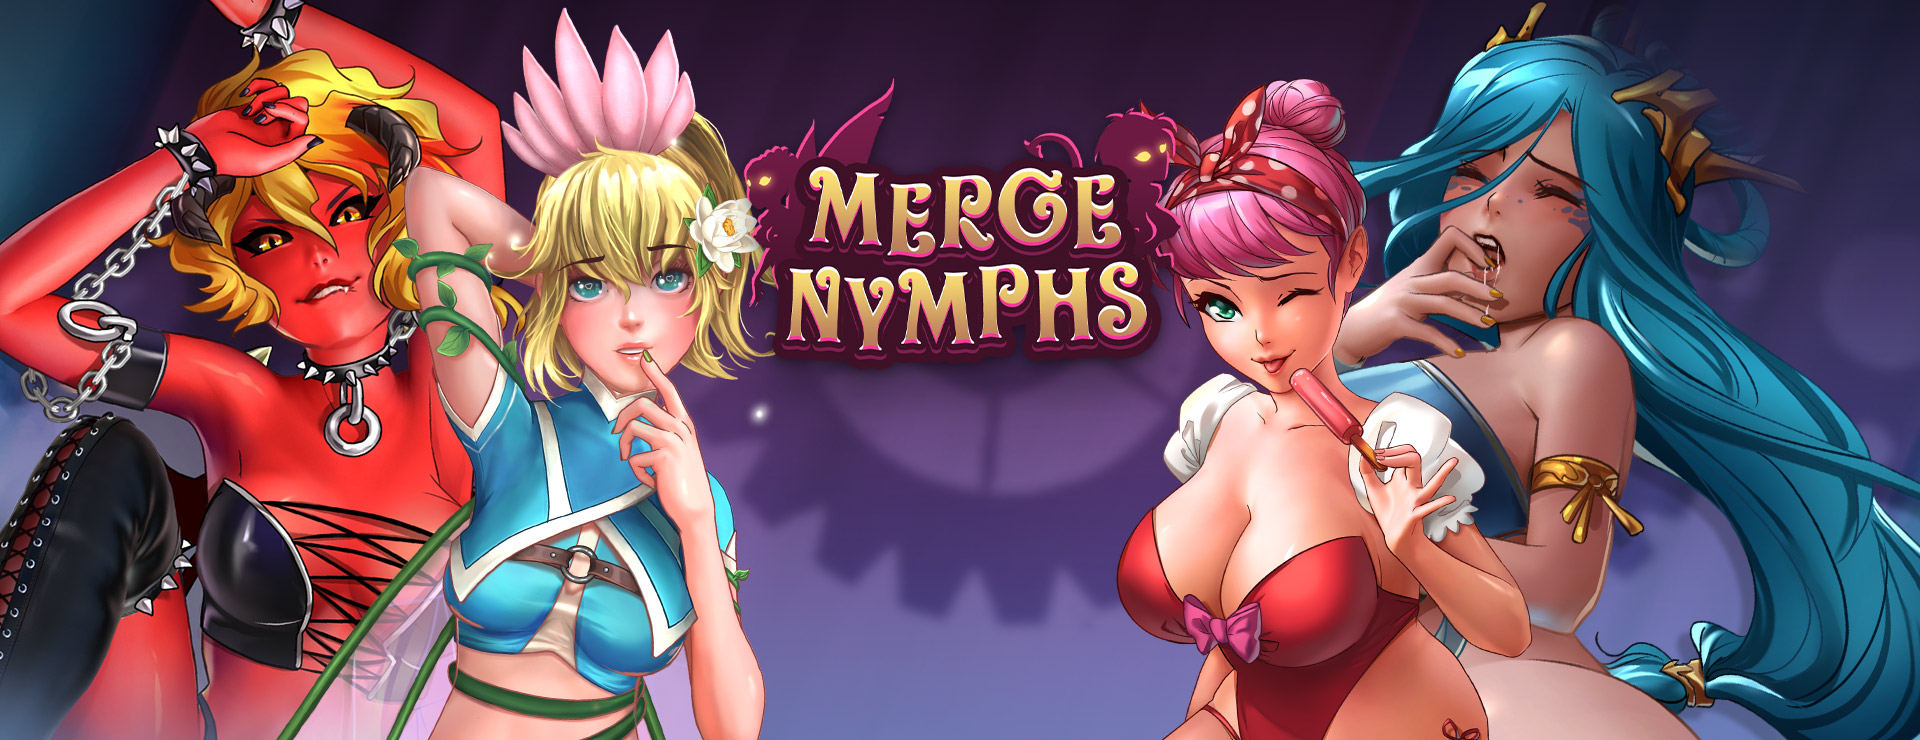 Merge Nymphs Game - Casual Game